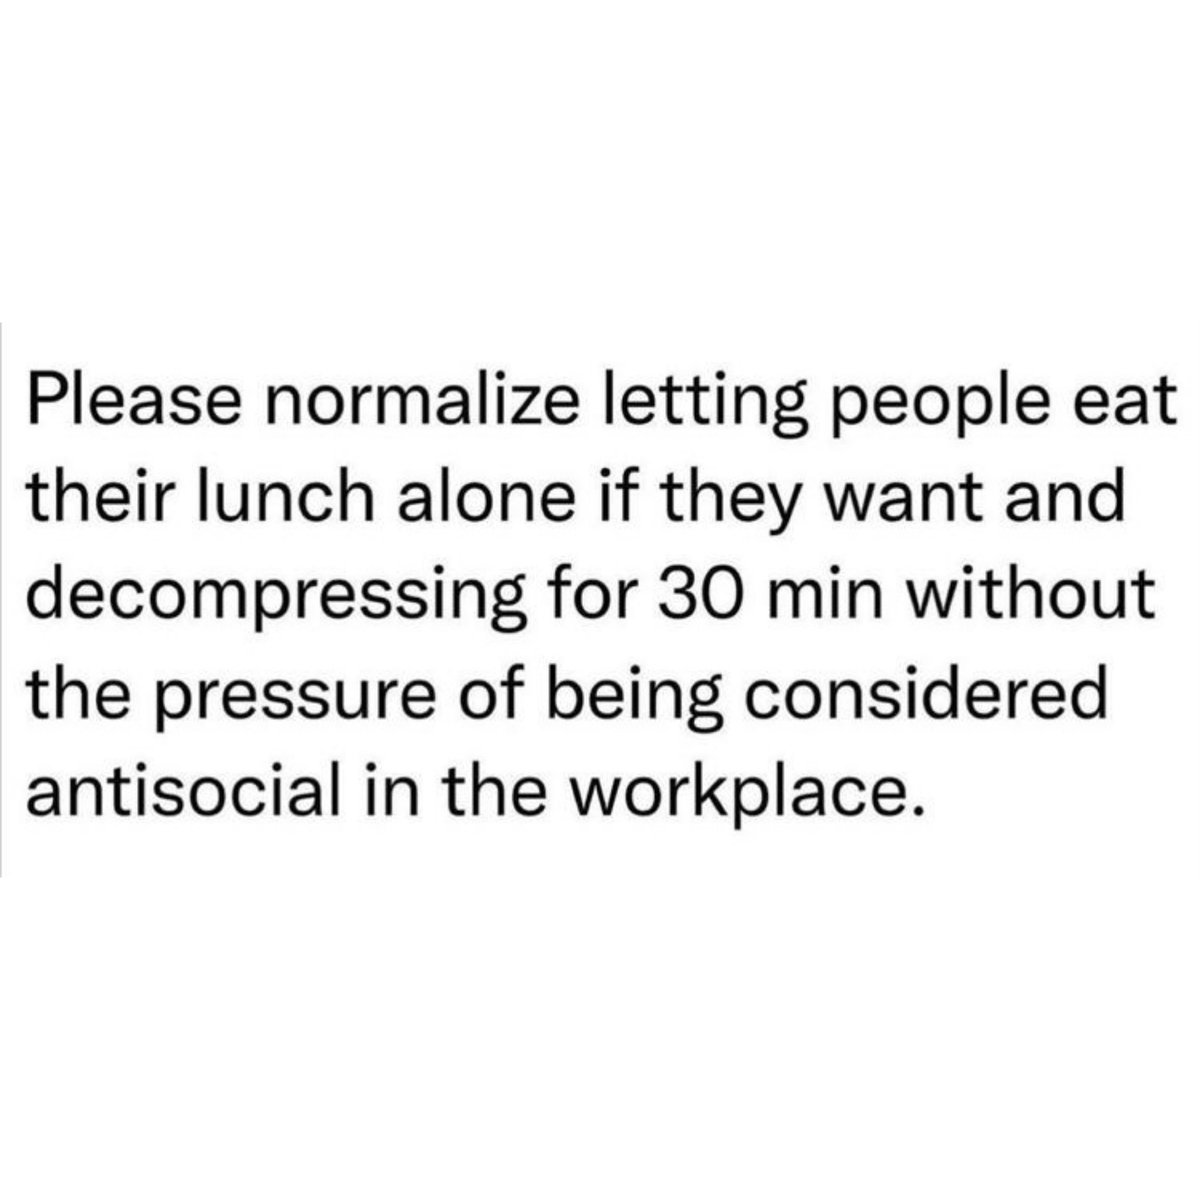 #normalize #eatalone #eatingalone #antisocial #workplace #meme #memes